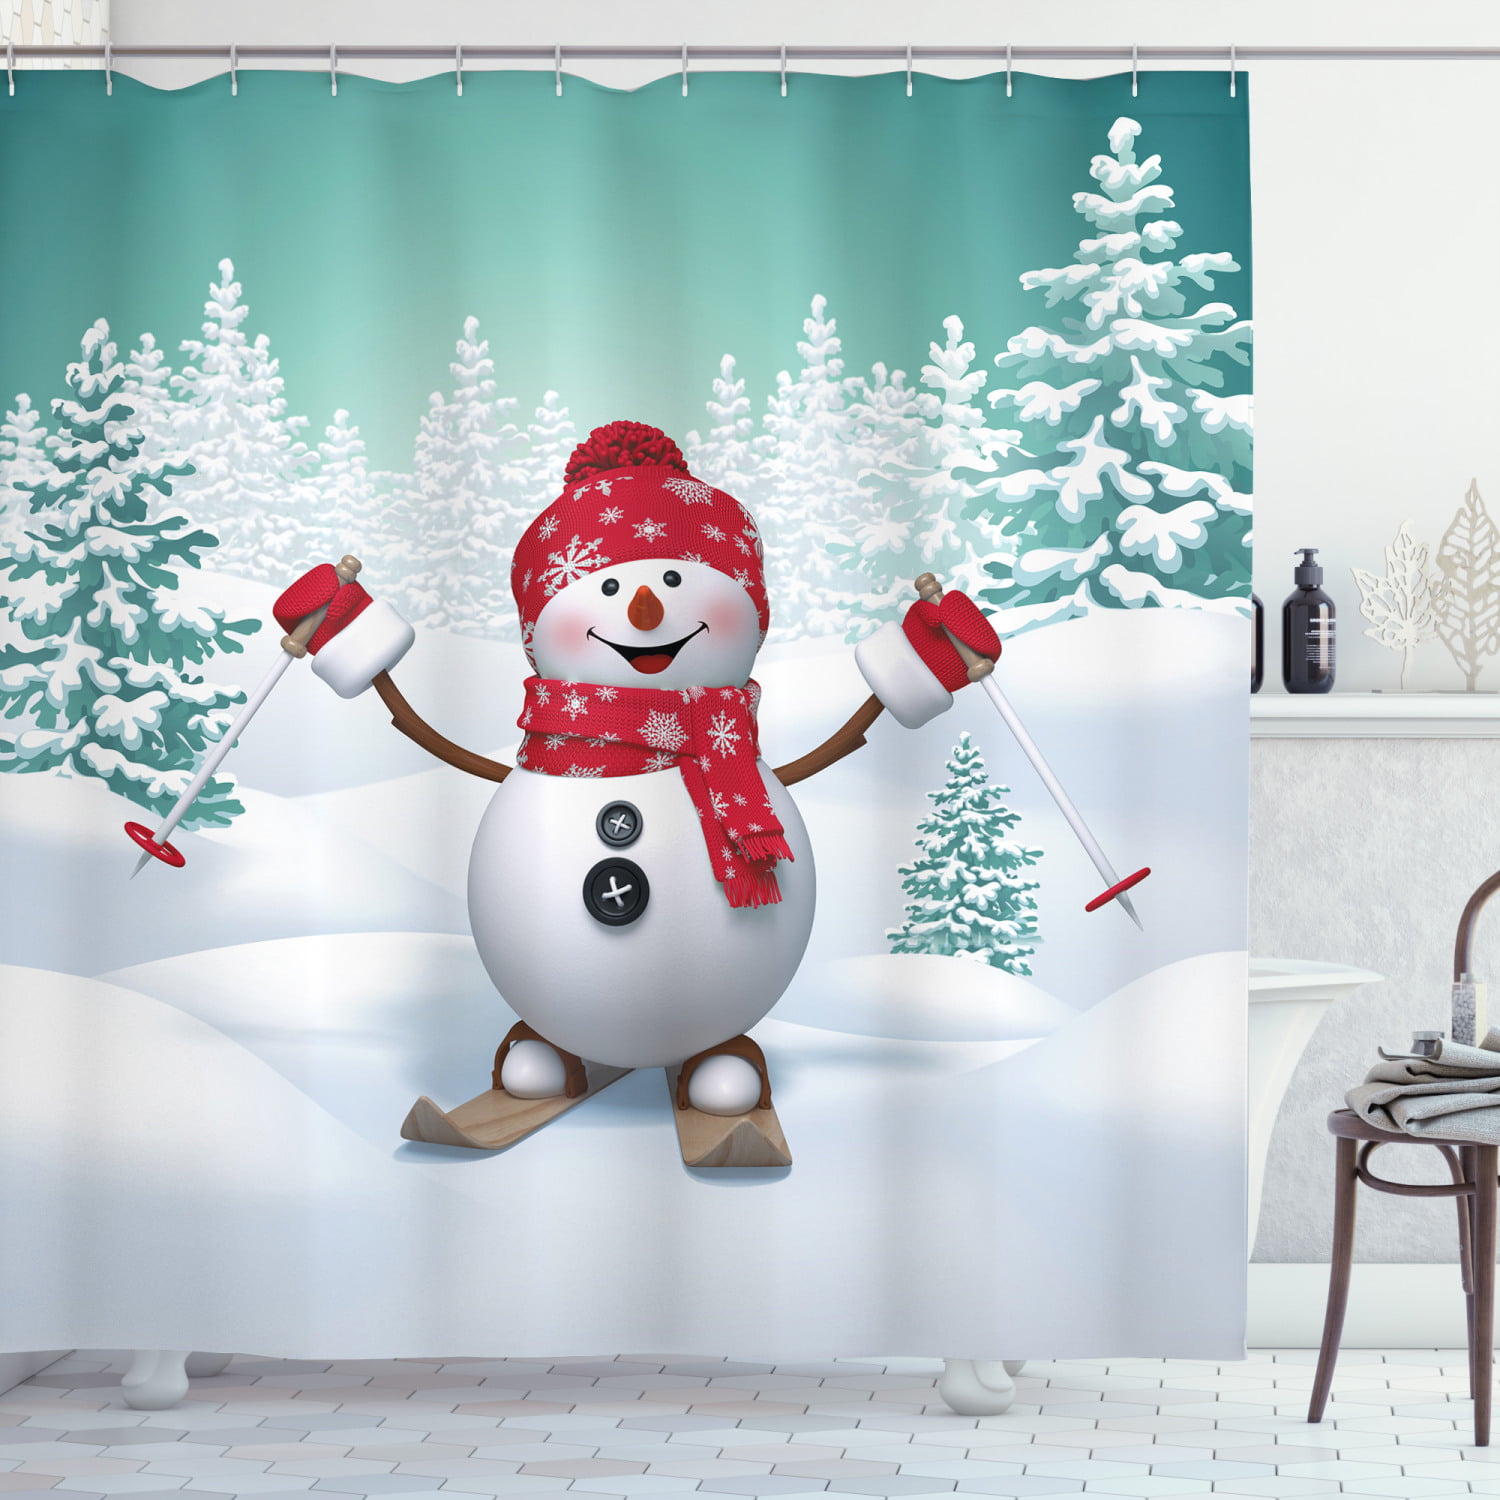 Christmas Elf In Red Hat Shower Curtain Bathroom Decor Fabric & 12hooks 71" 